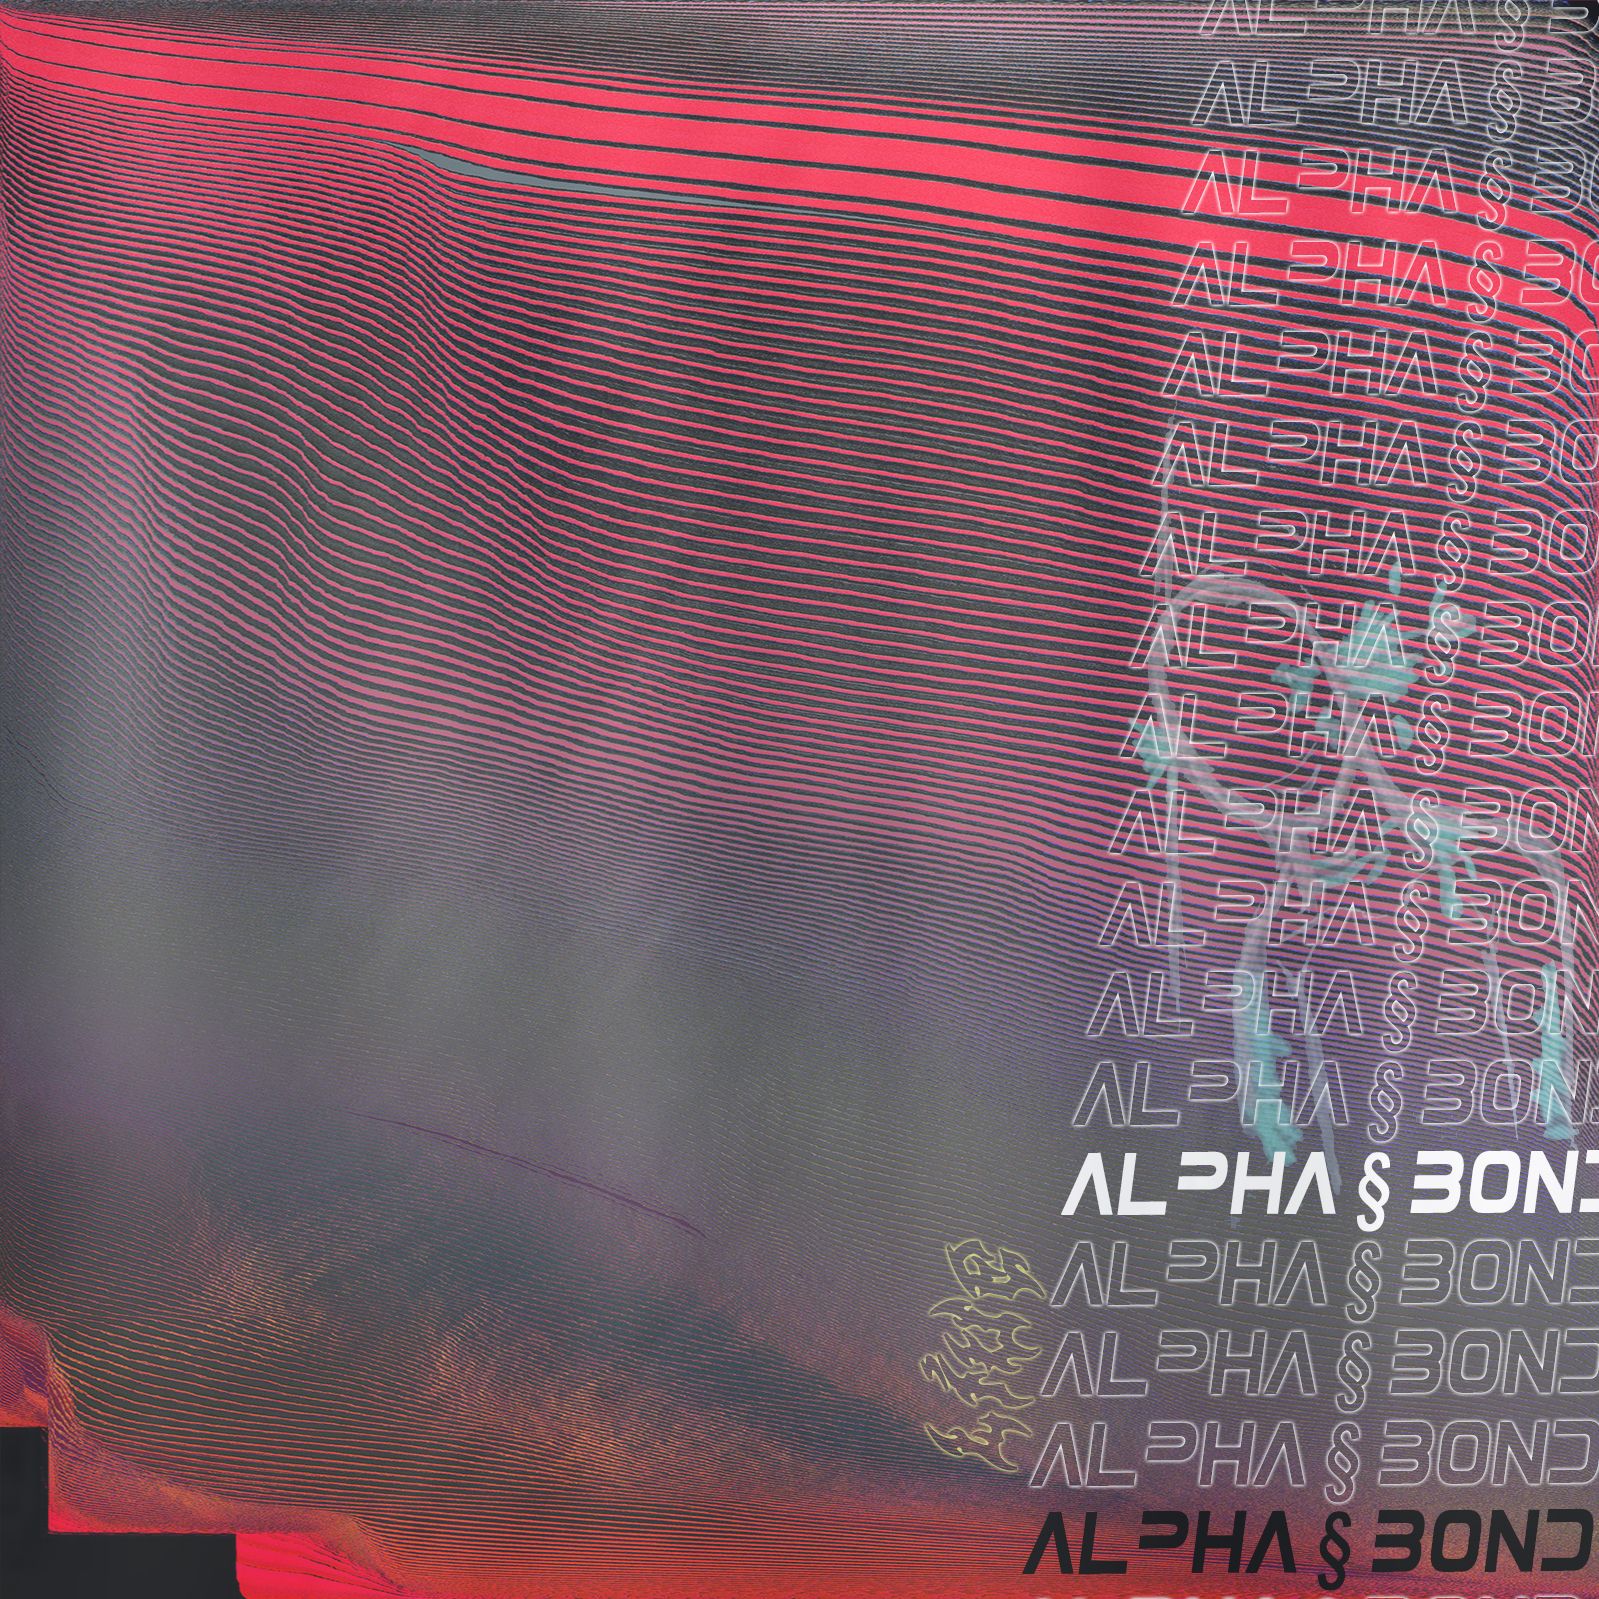 Dhawunirodha alpha § bond